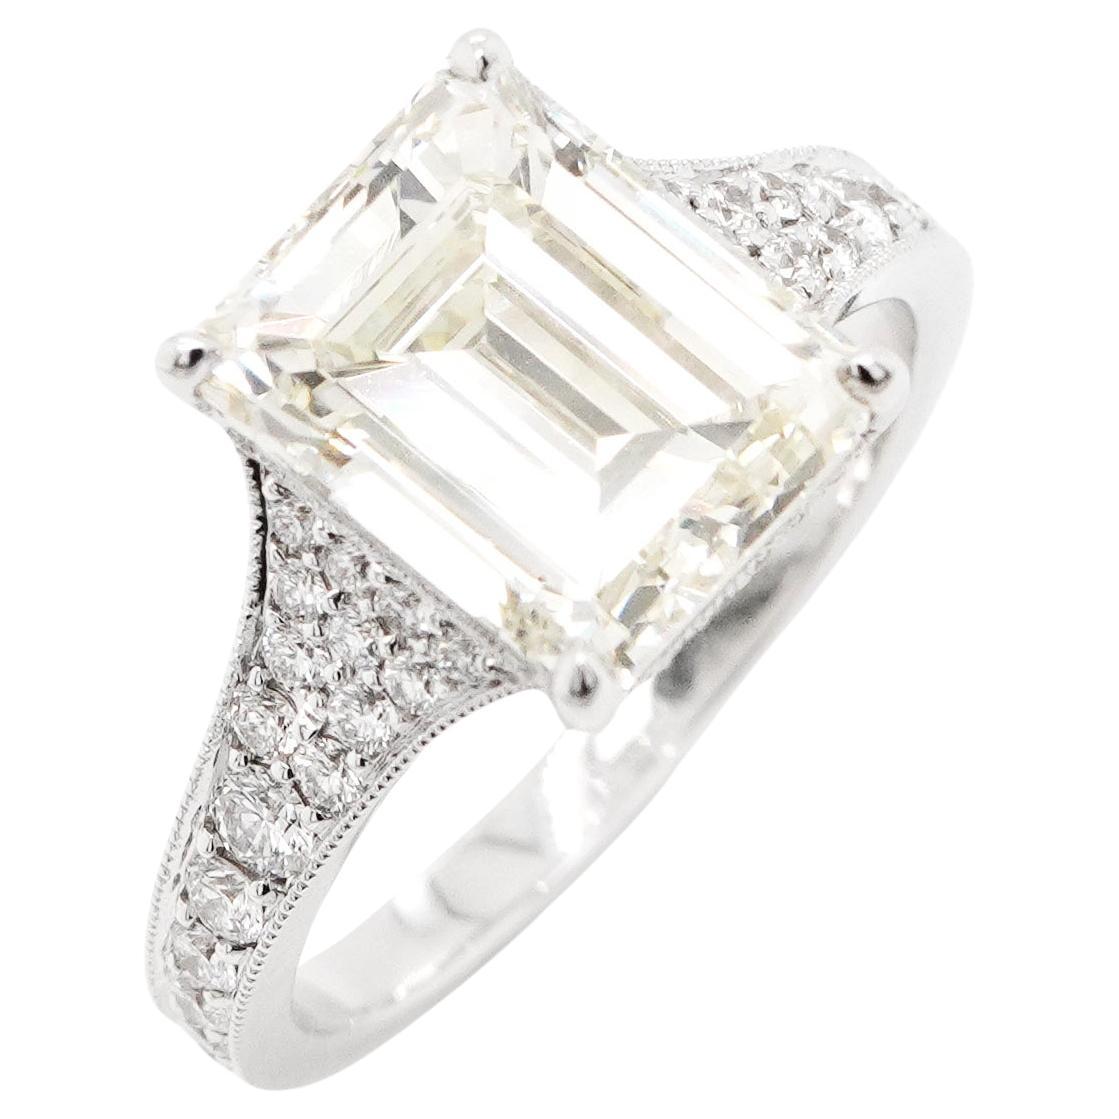 BENJAMIN FINE JEWELRY 3.44 cts Diamond 18K Ring